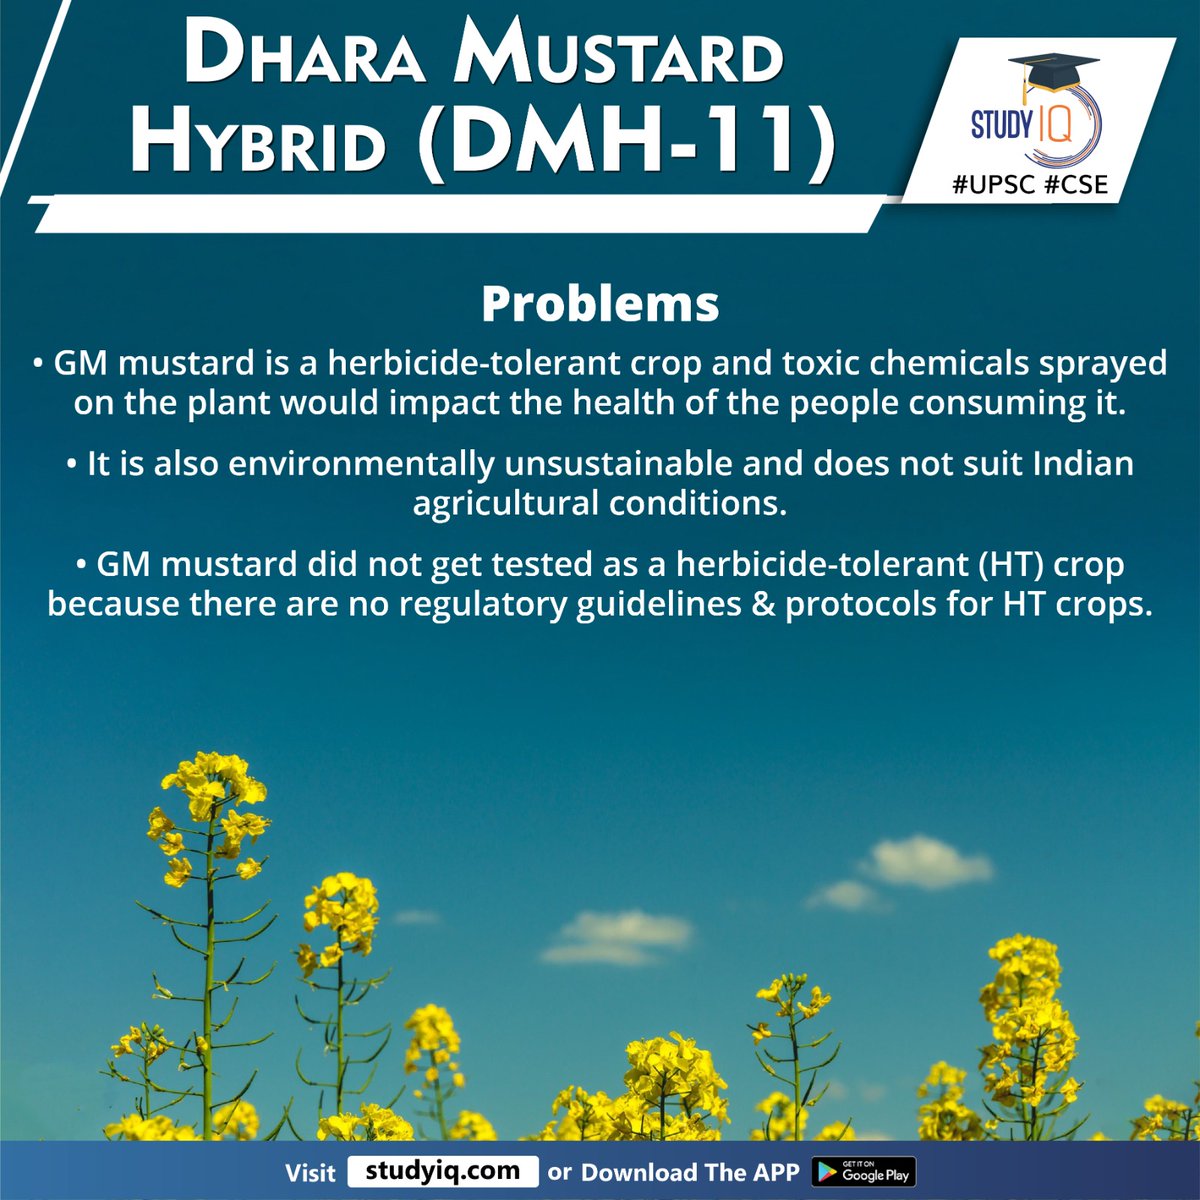 Dhara Mustard Hybrid (DMH-11)

#dharamustardhybrid #dmh11 #india #mustardcrop #whyinnews #delhiuniversity #delhi #herbicidetolerant #ht #barstar #europe #gmcrops #gmmustard #indianagriculture #htcrops #upsc #cse #Ips #ias